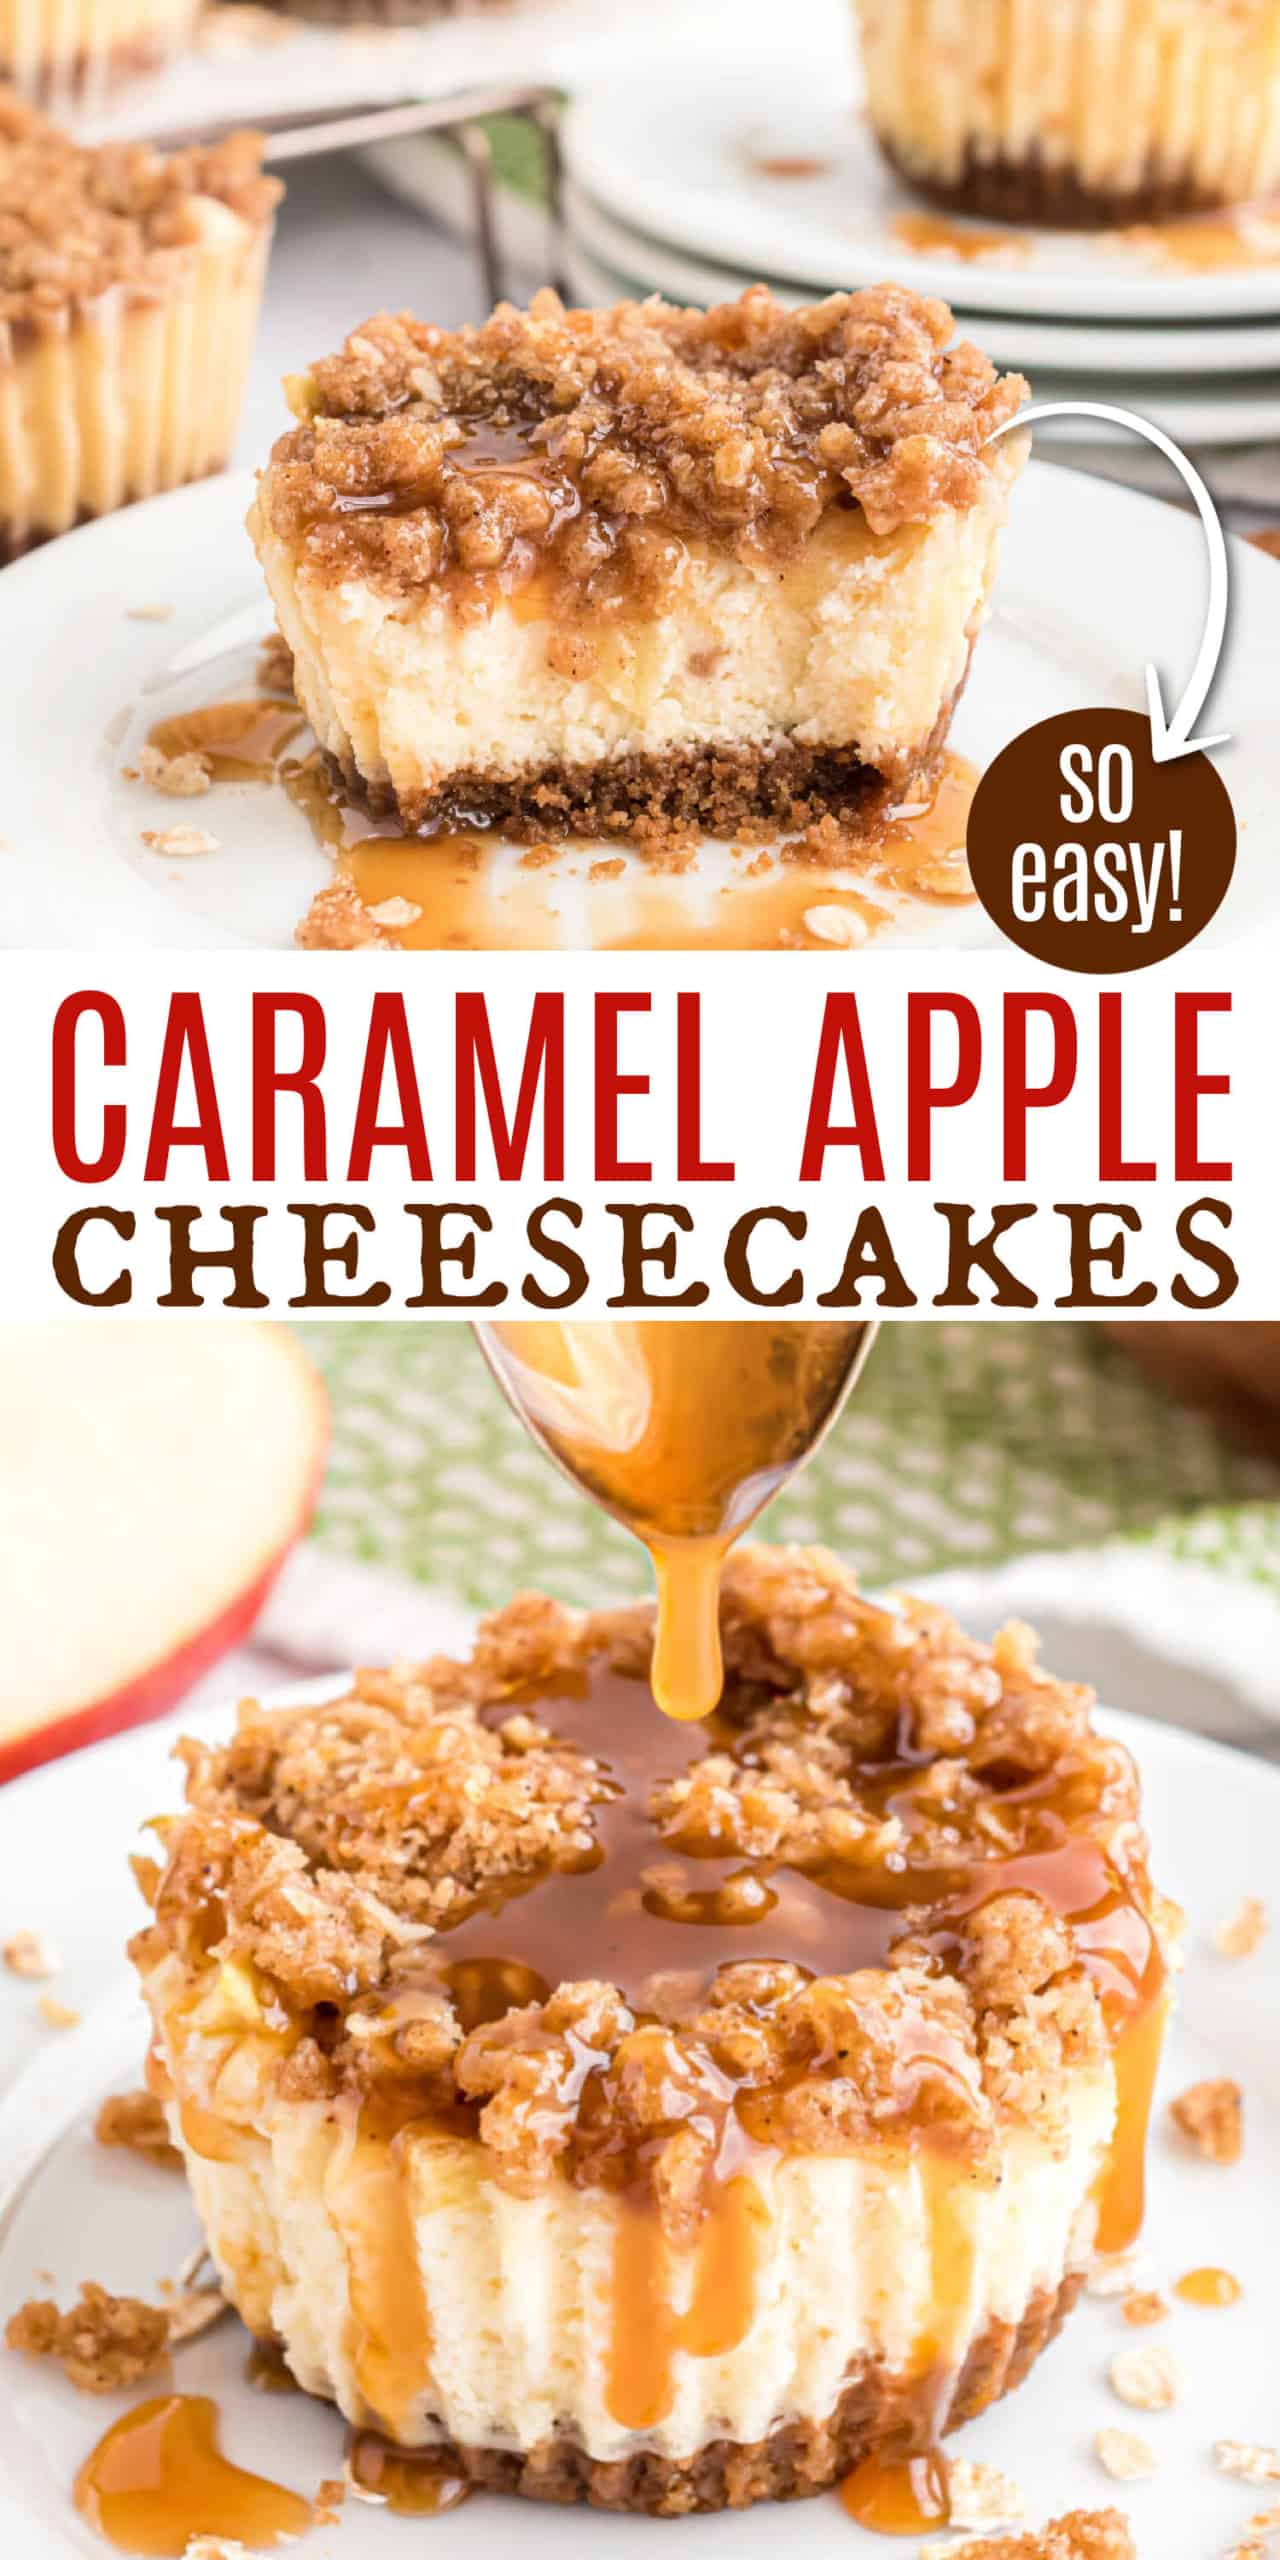 https://www.shugarysweets.com/wp-content/uploads/2019/11/caramel-apple-cheesecakes-pin-scaled.jpg